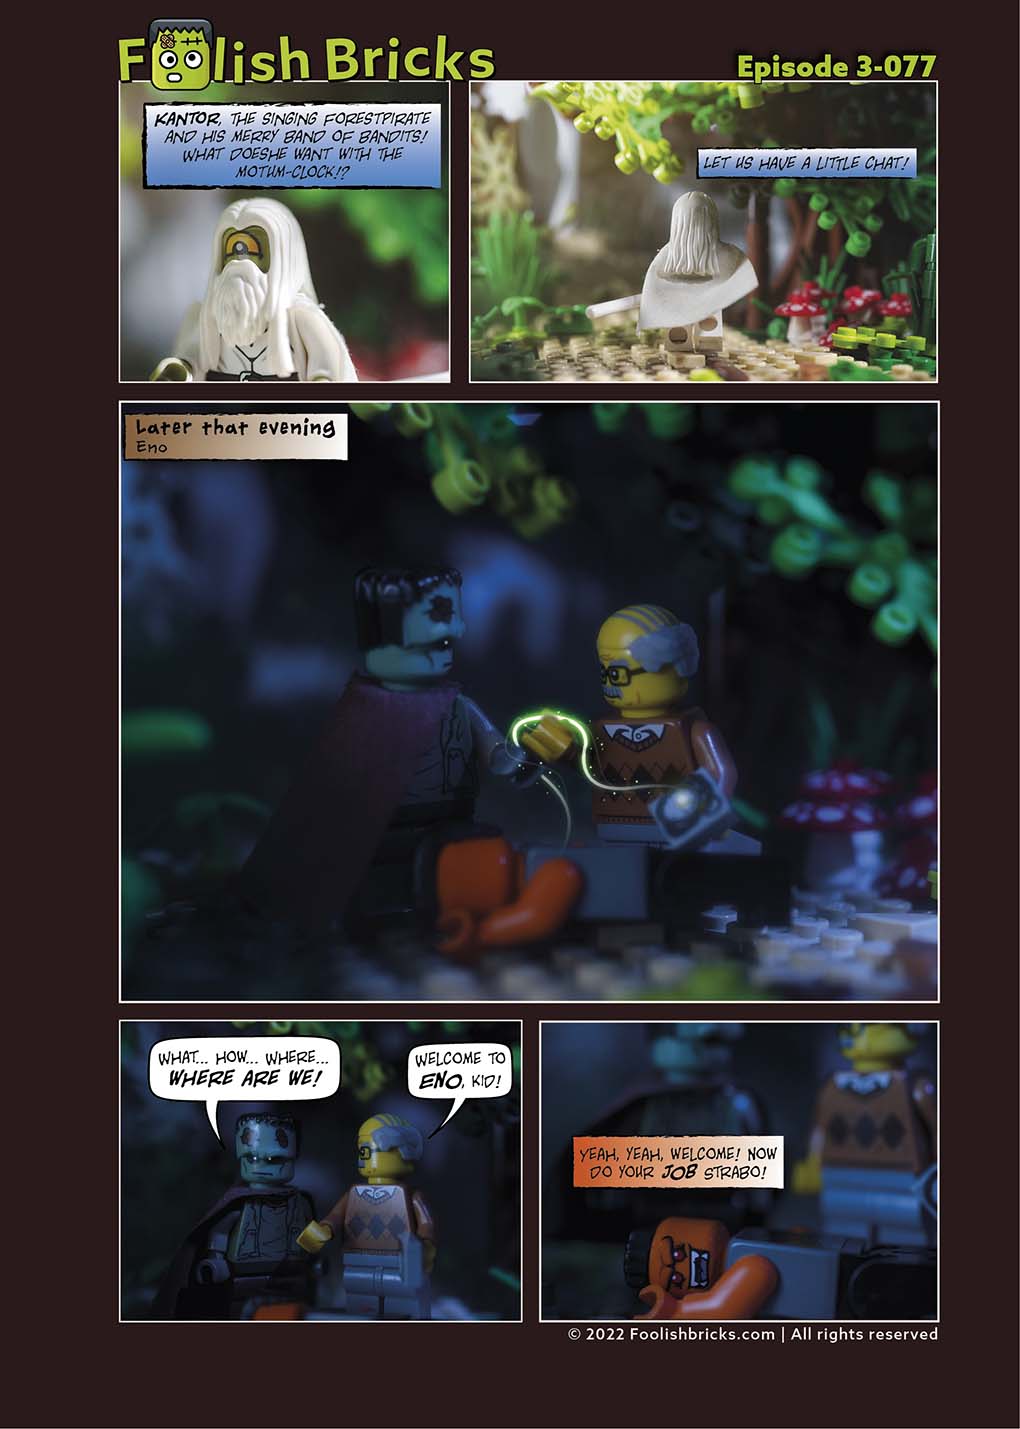 Lego Comic - Welcome to Eno